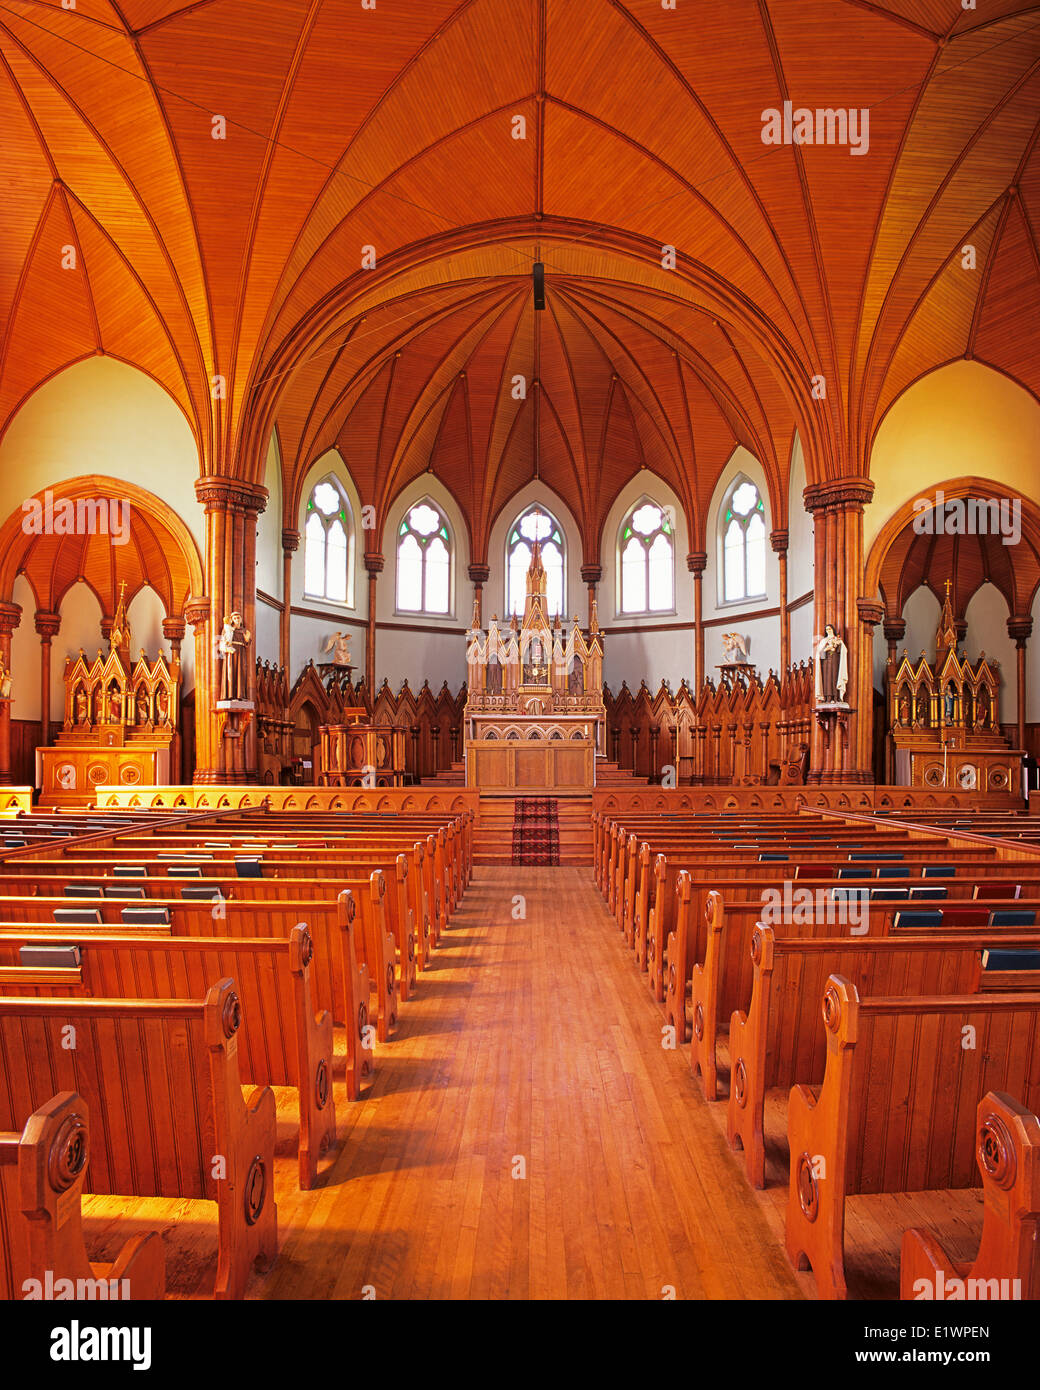 ST. MARYS CHURCH, INTERIOR, INDIAN RIVER, PRINCE EDWARD ISLAND, CANADA Stock Photo